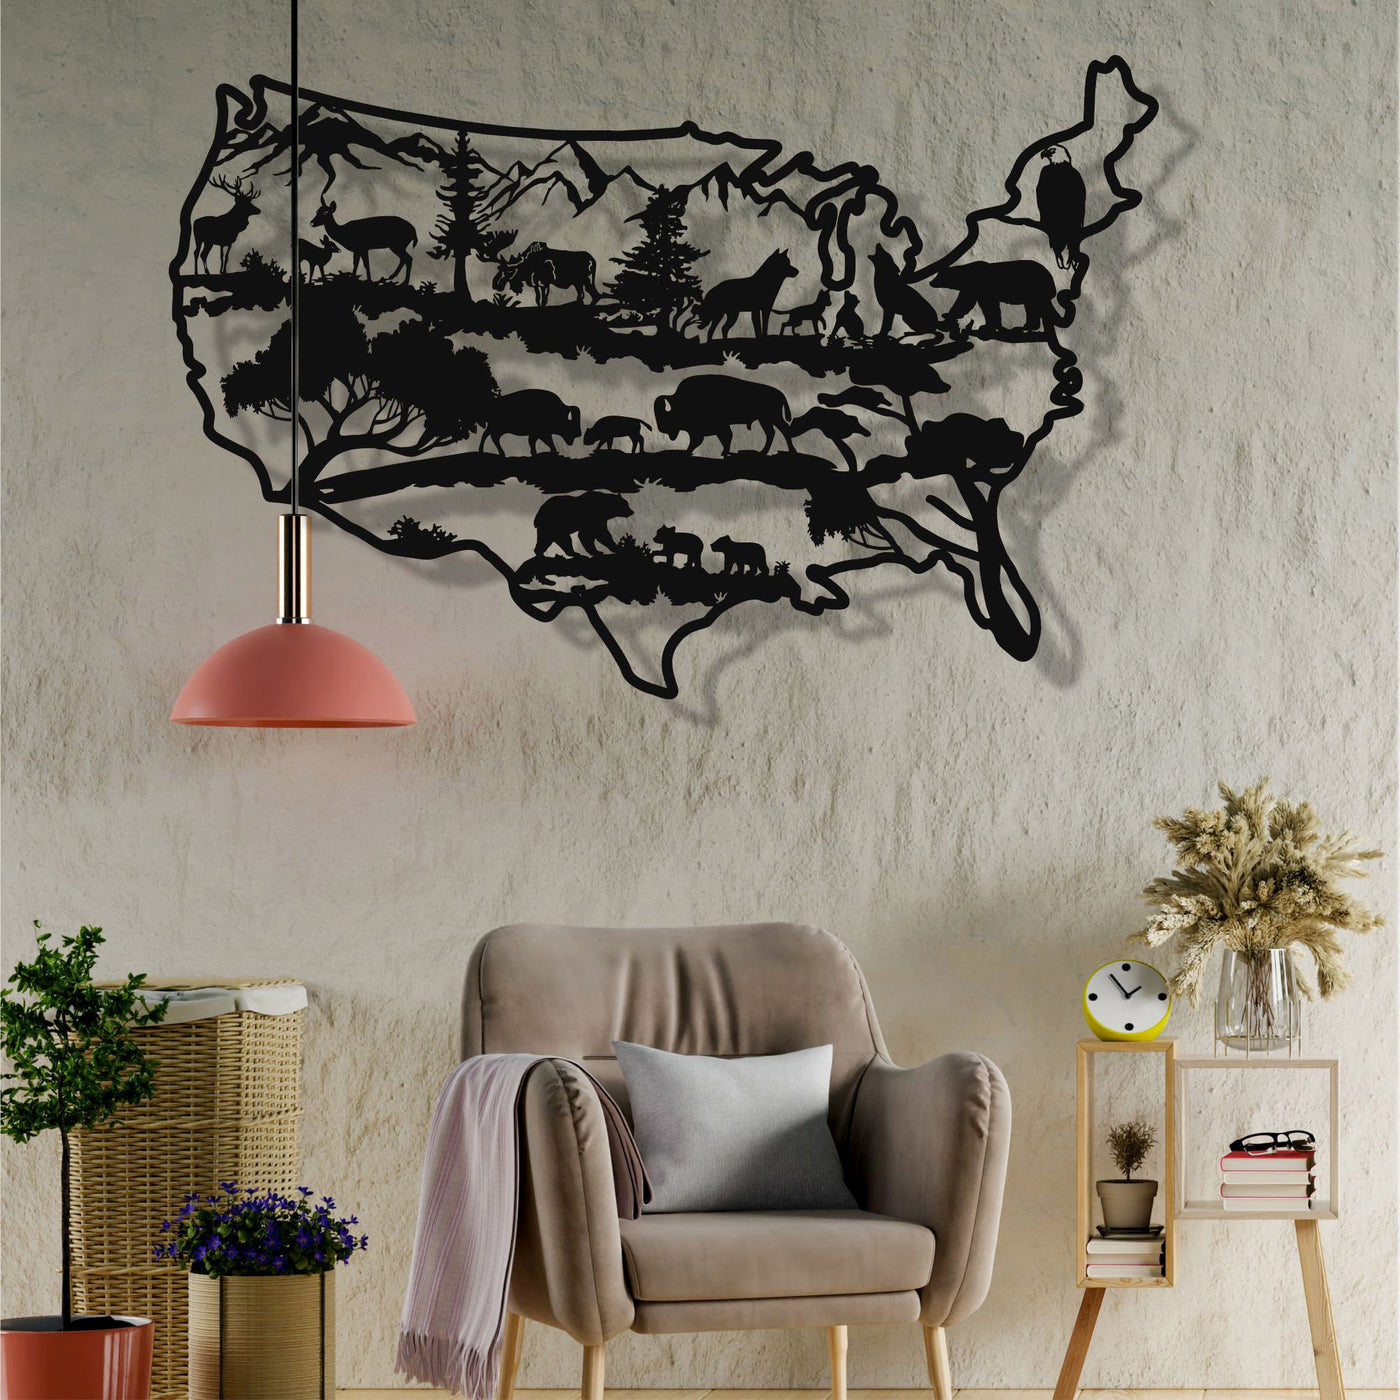 Usa Wildlife Map Metal Wall Art